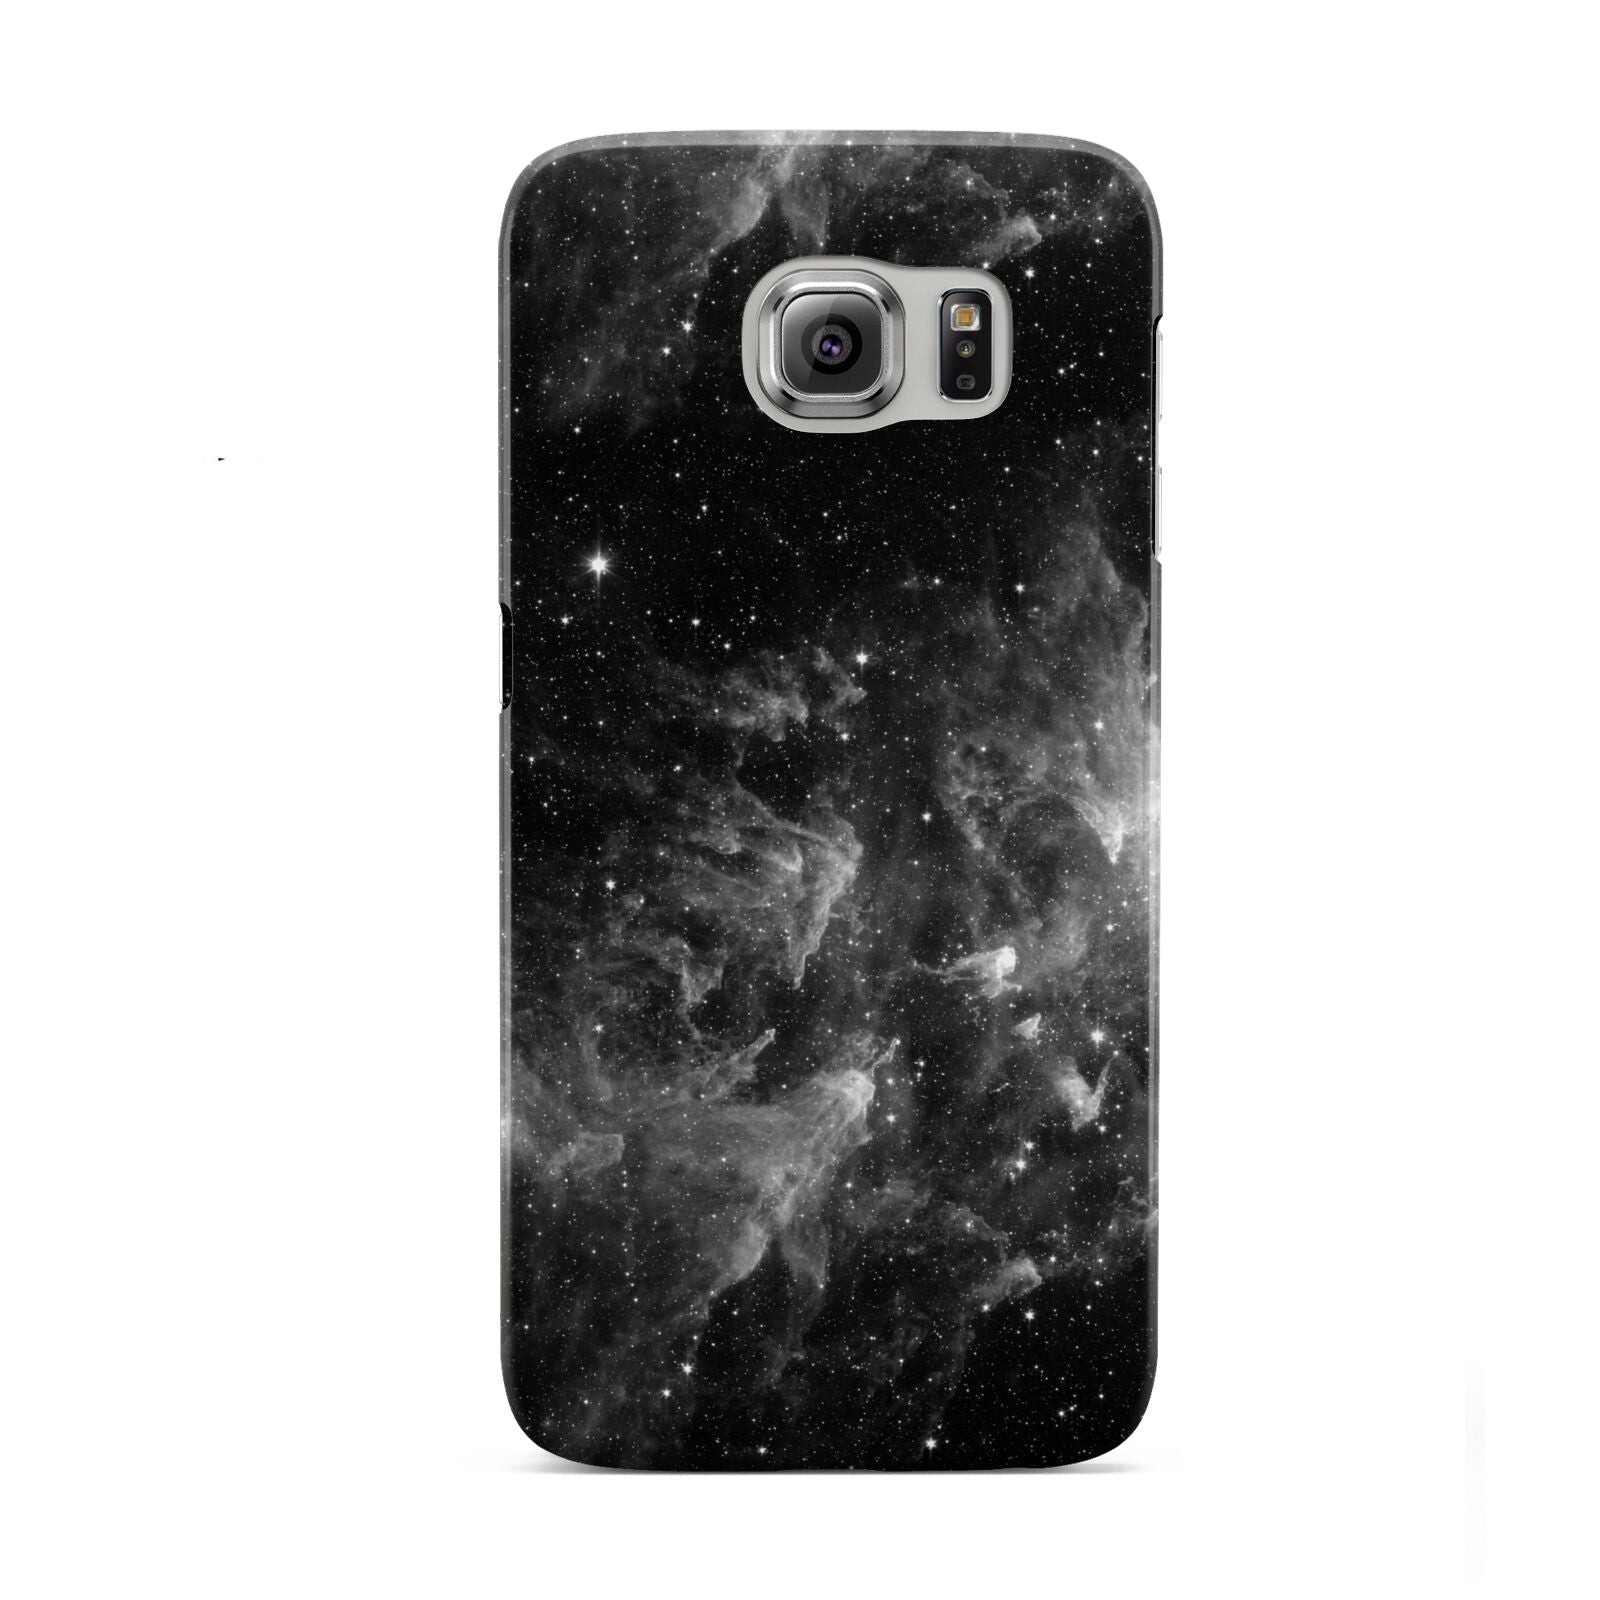 Black Space Samsung Galaxy S6 Case